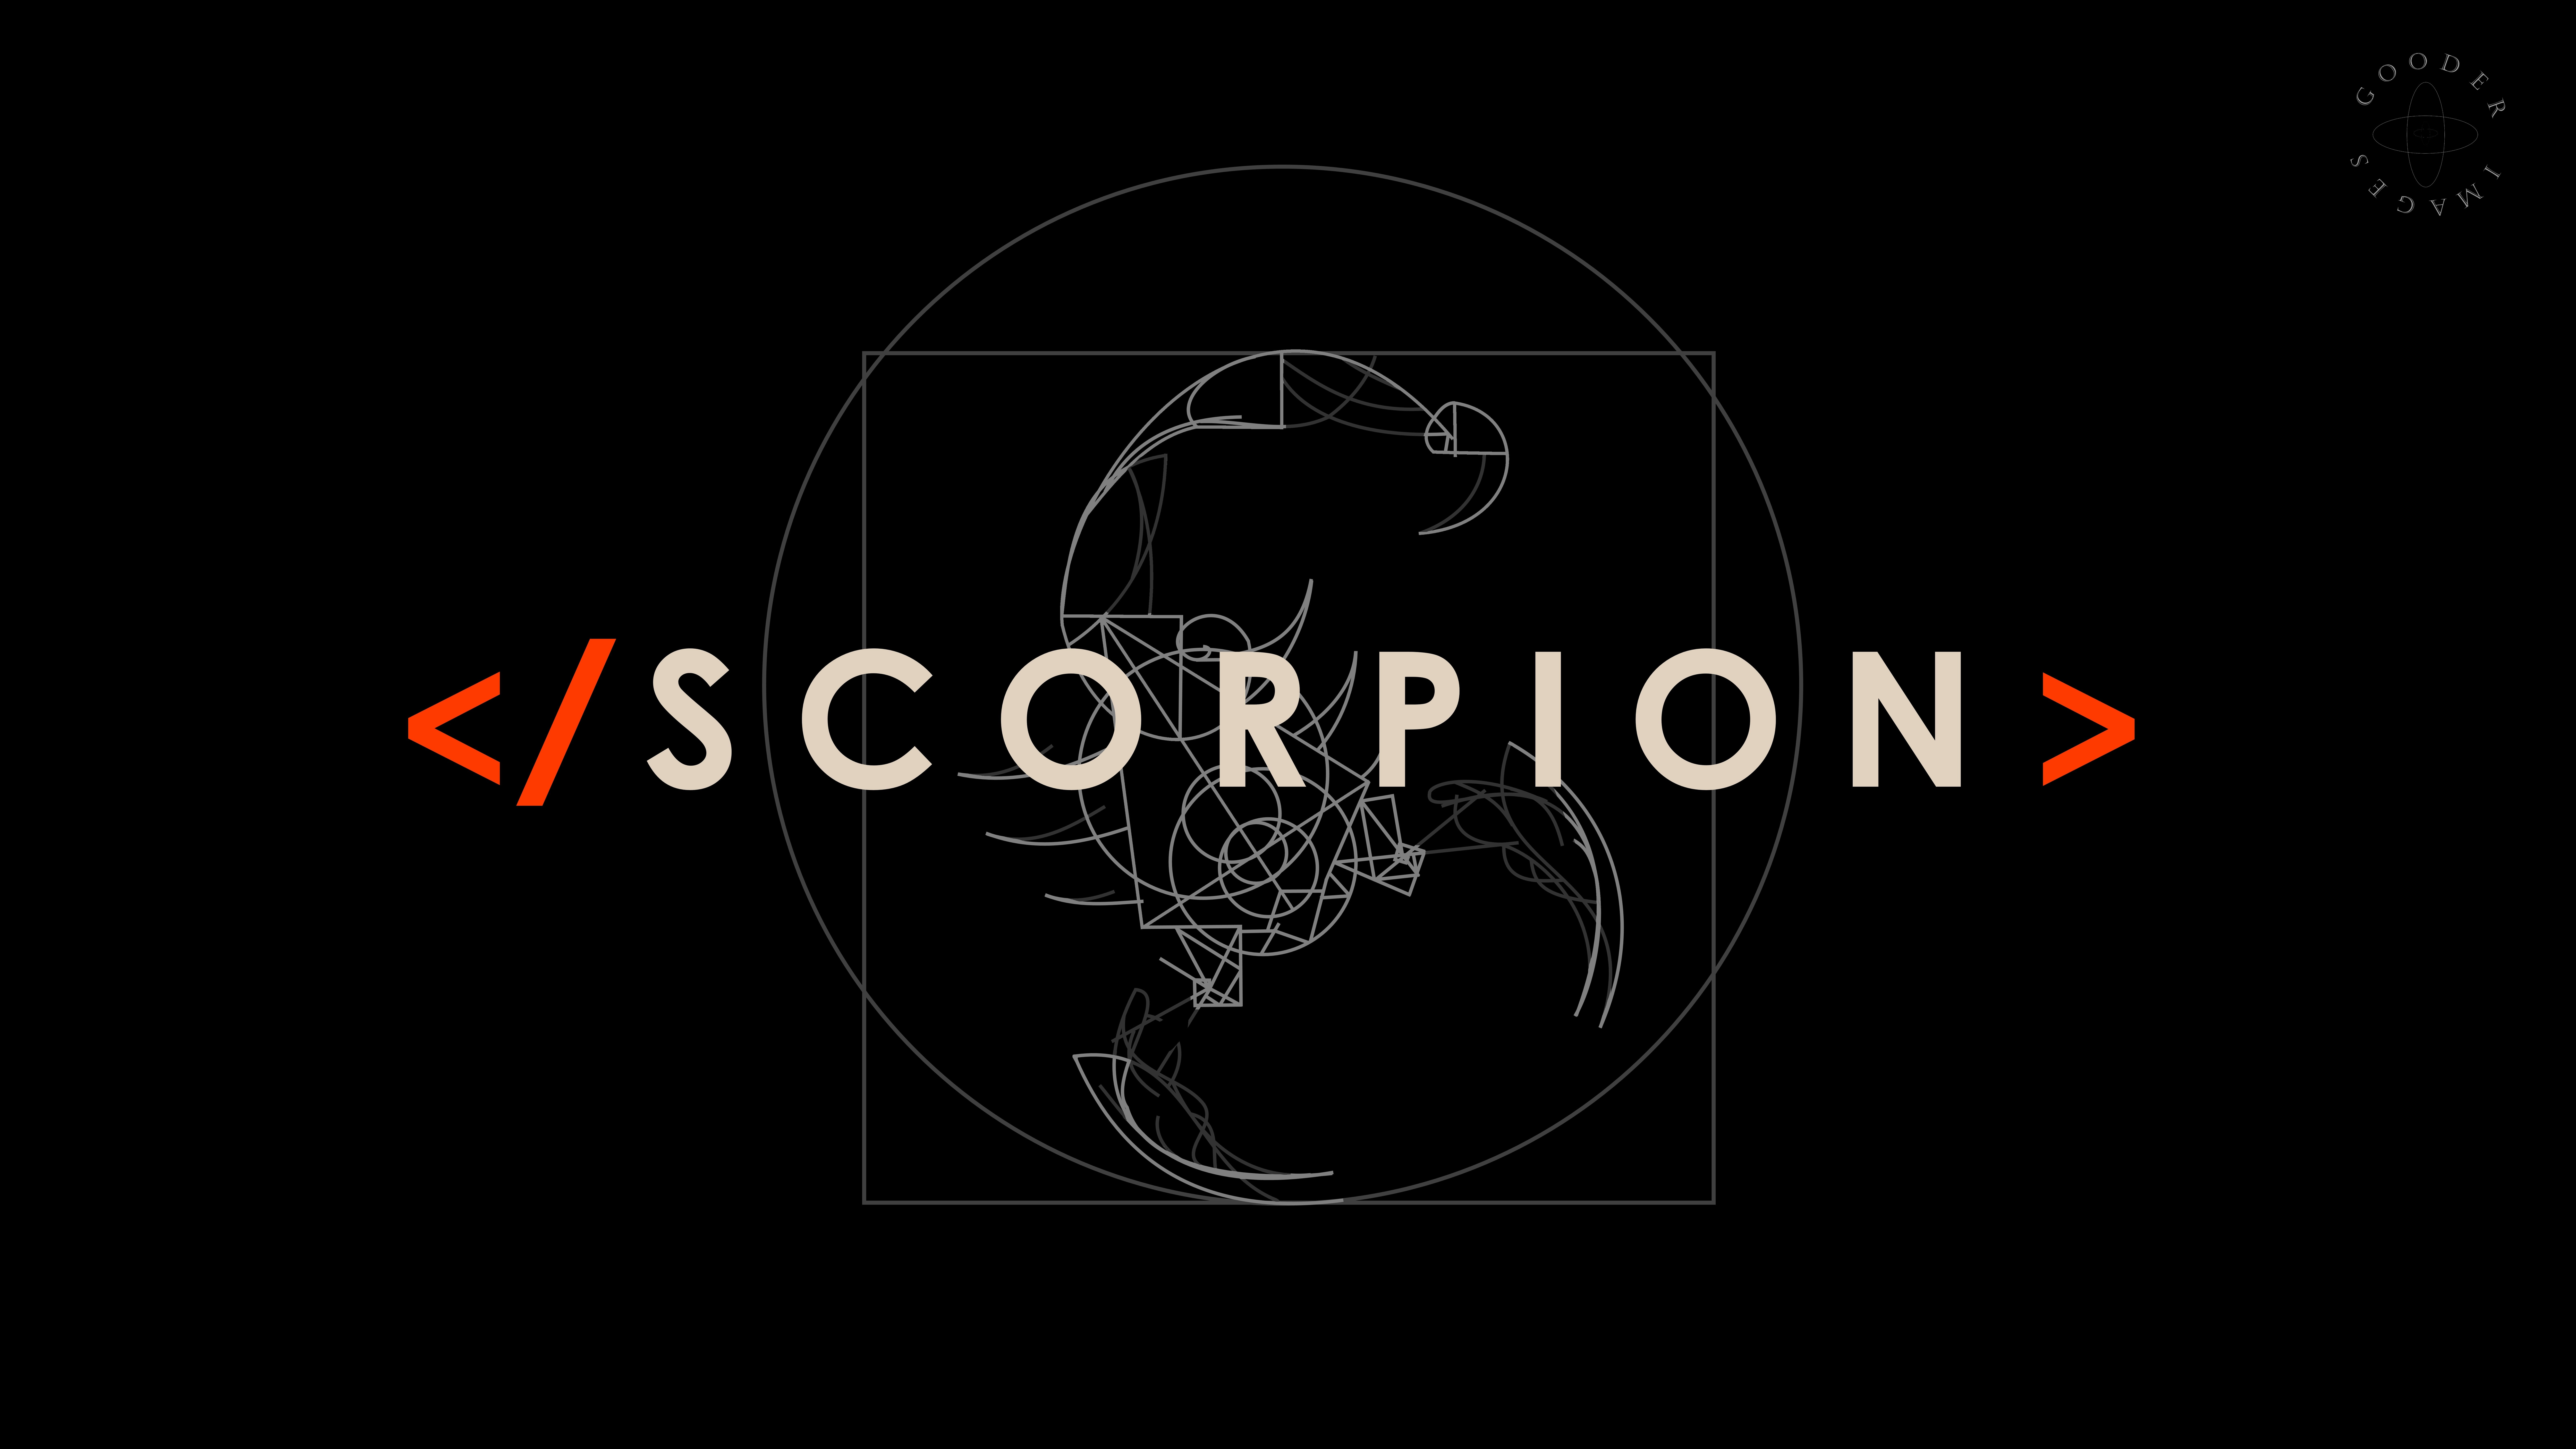 Scorpion TV Show Logo Wallpaper